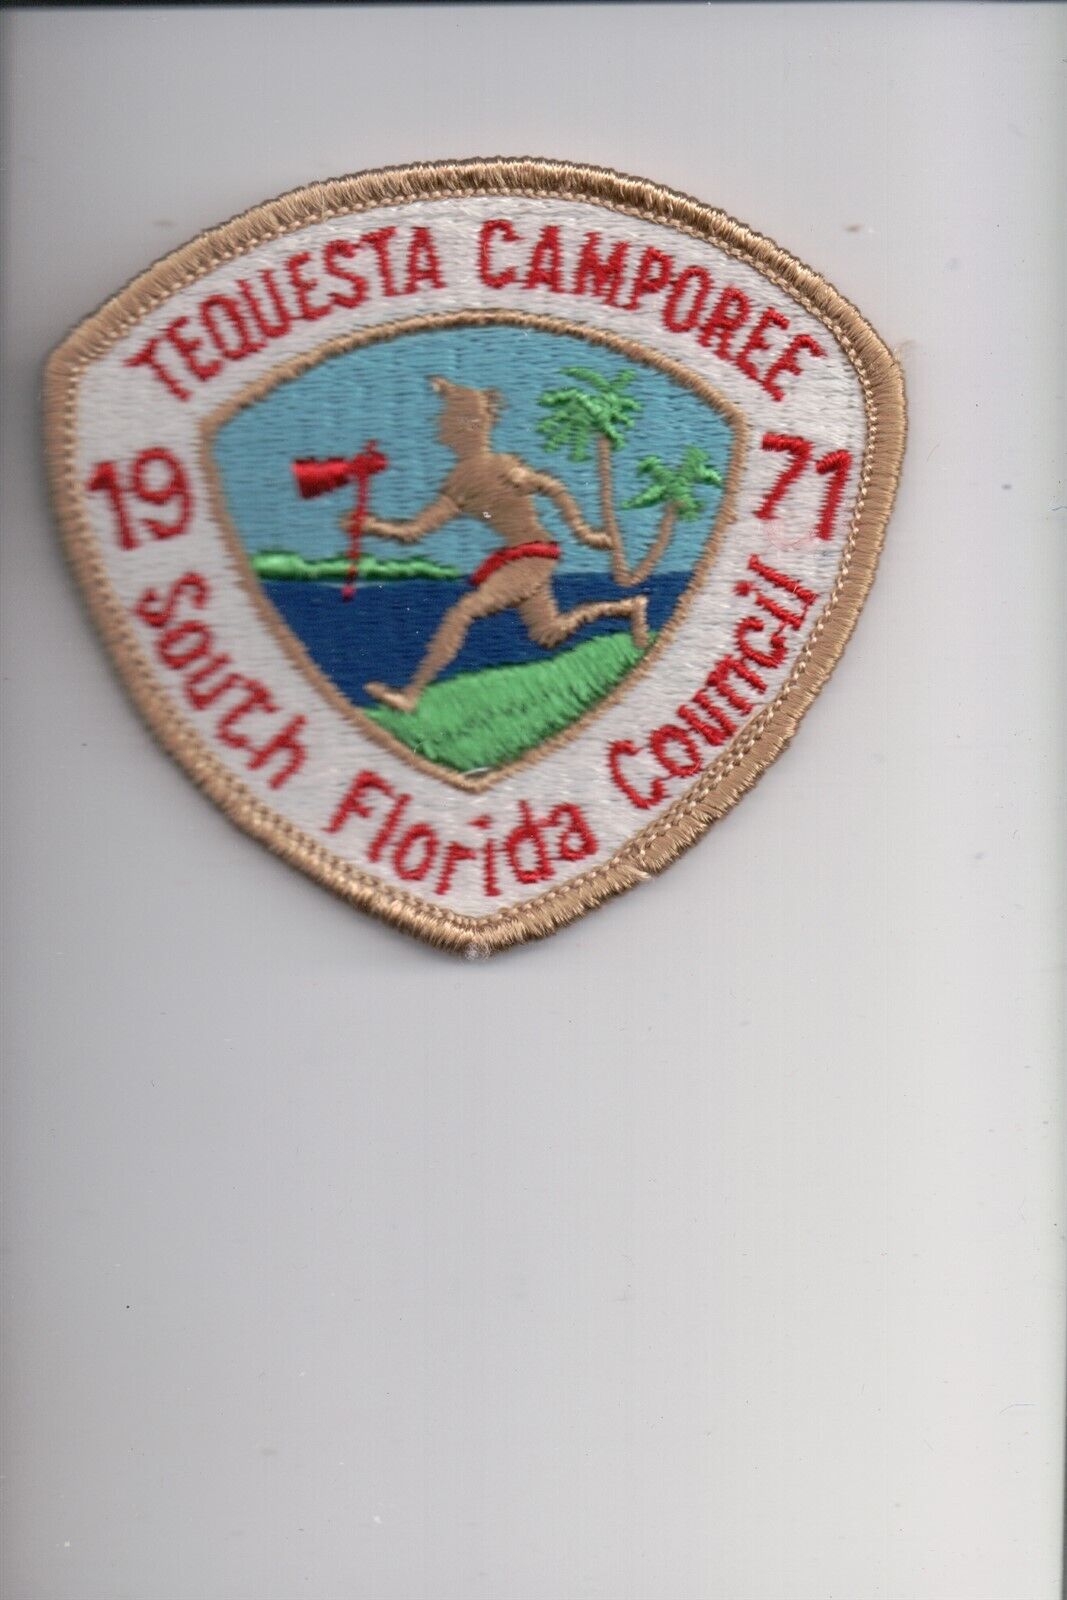 1971 South Florida Council Tequesta Camporee patch